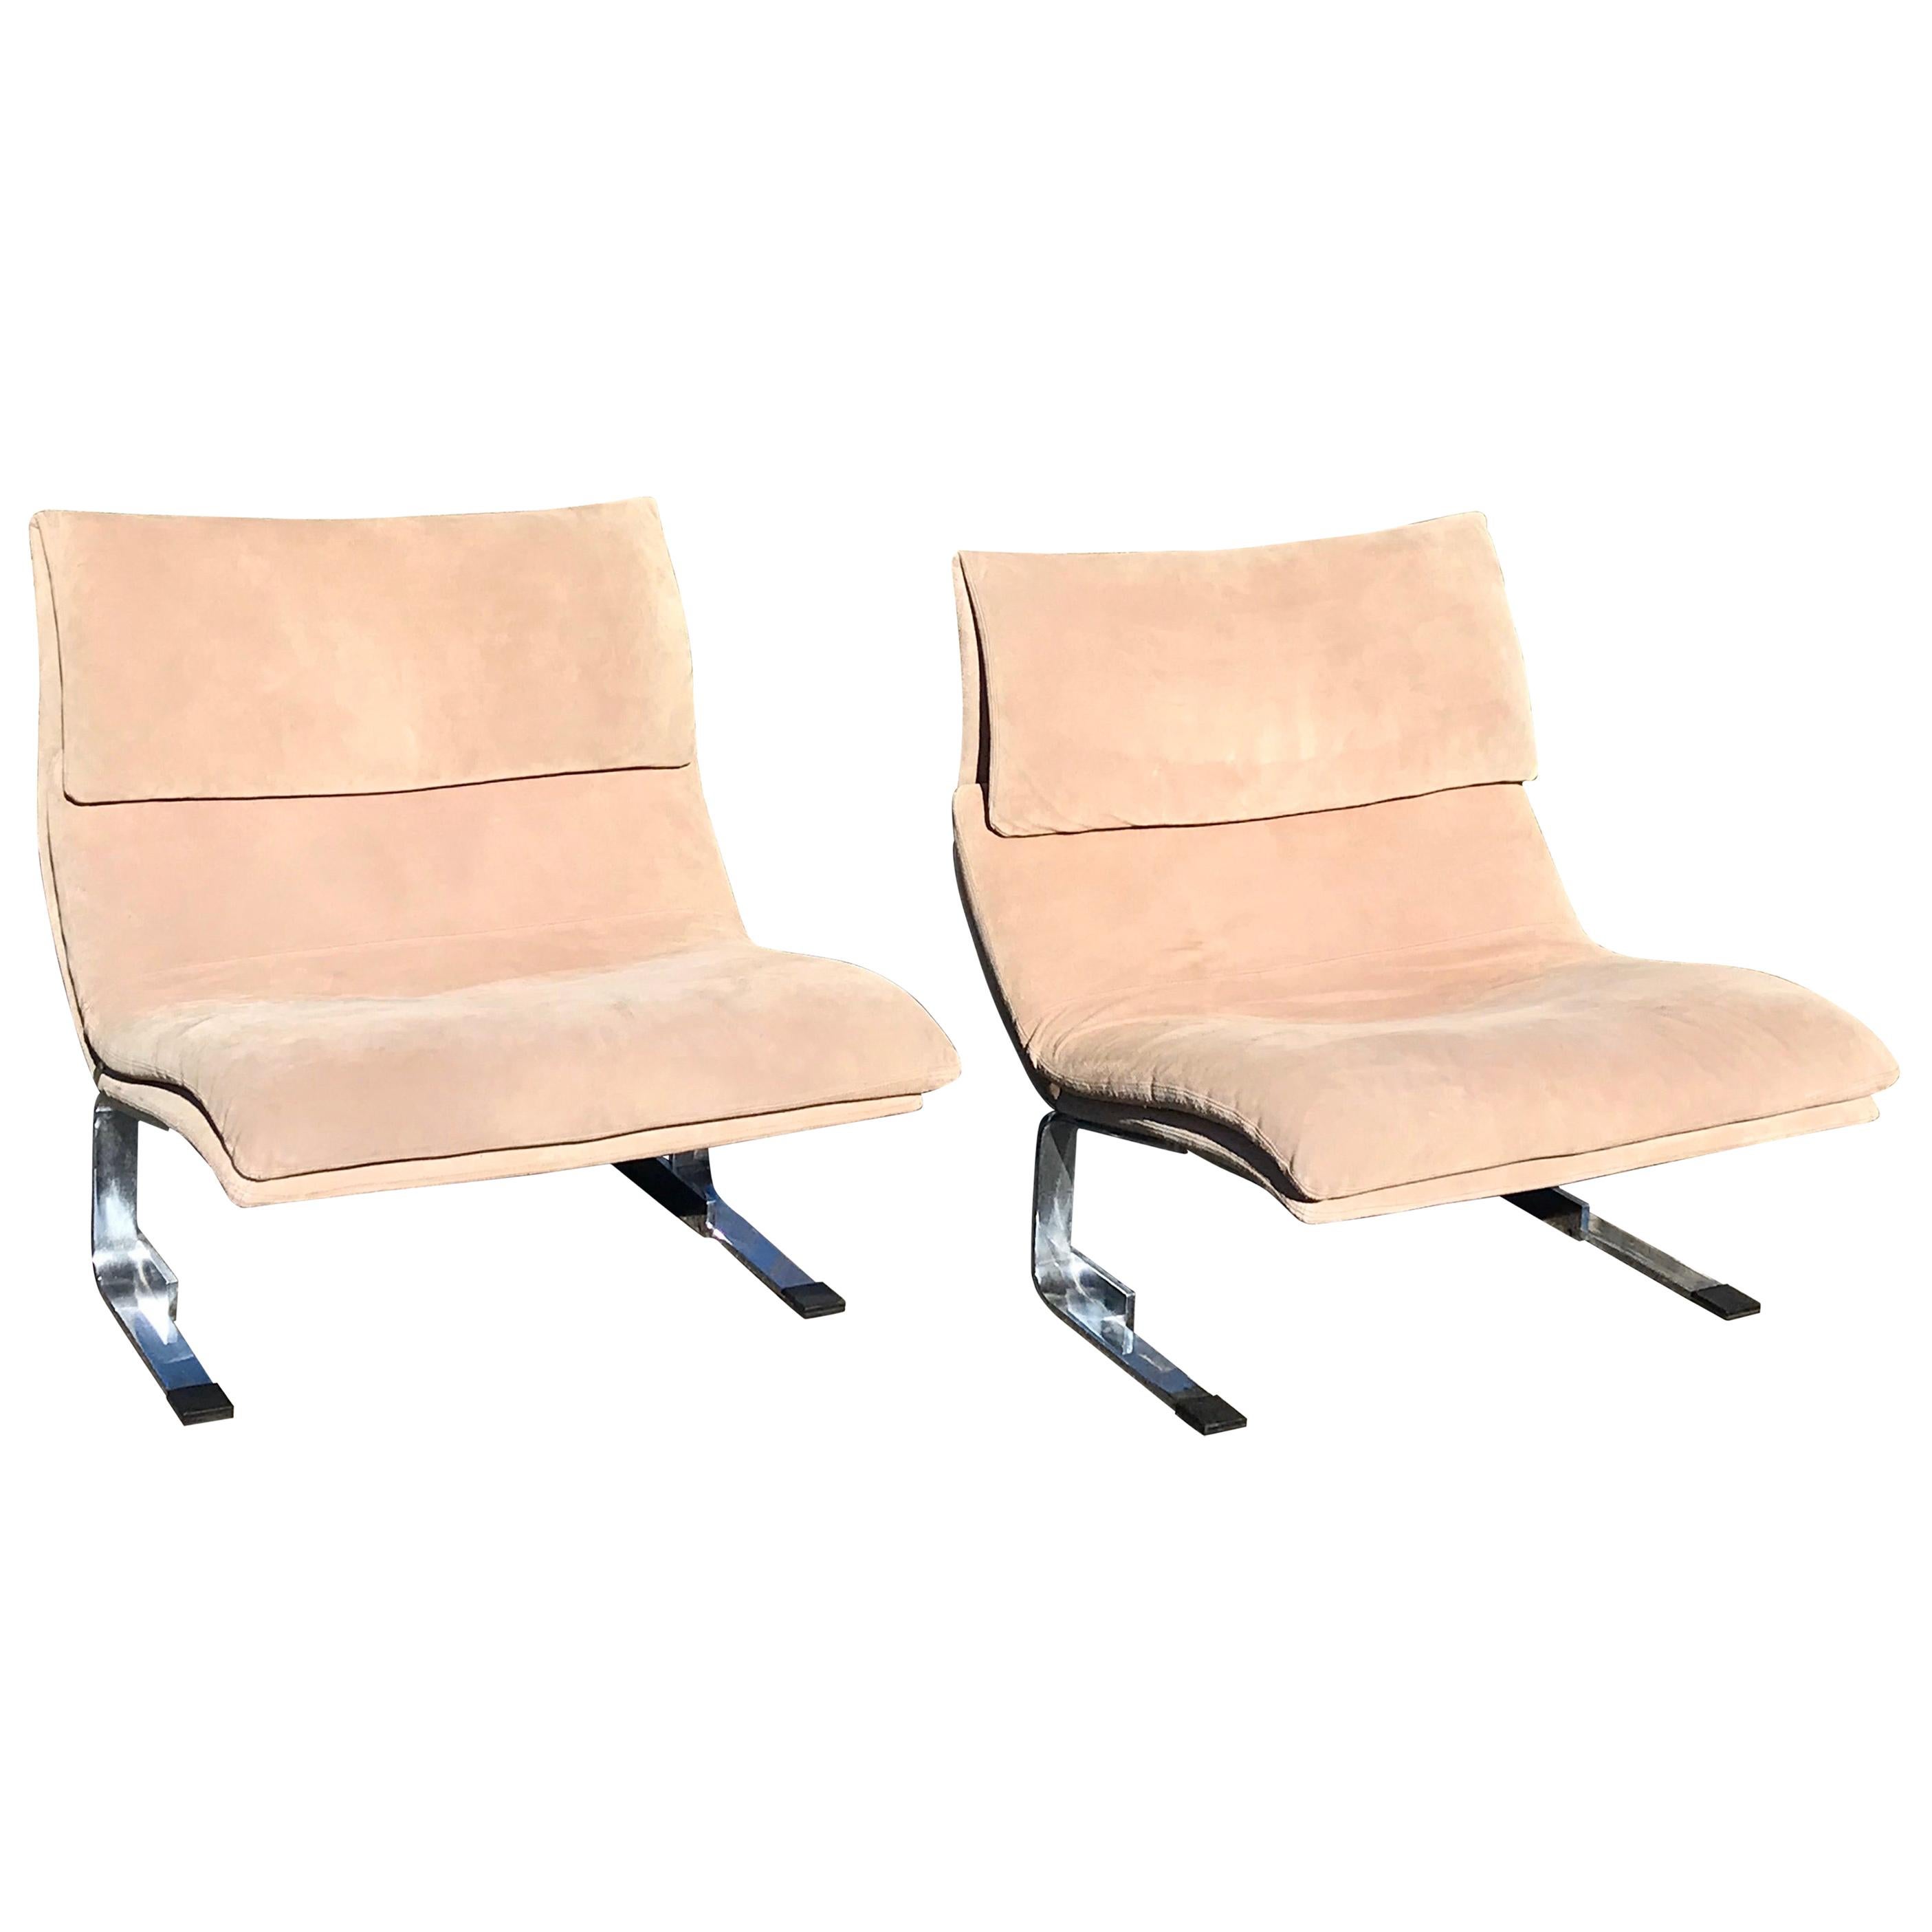 Pair of Mid-Century Modern Saporiti Suede "Onda" Lounge Chairs, Italy, 1970s